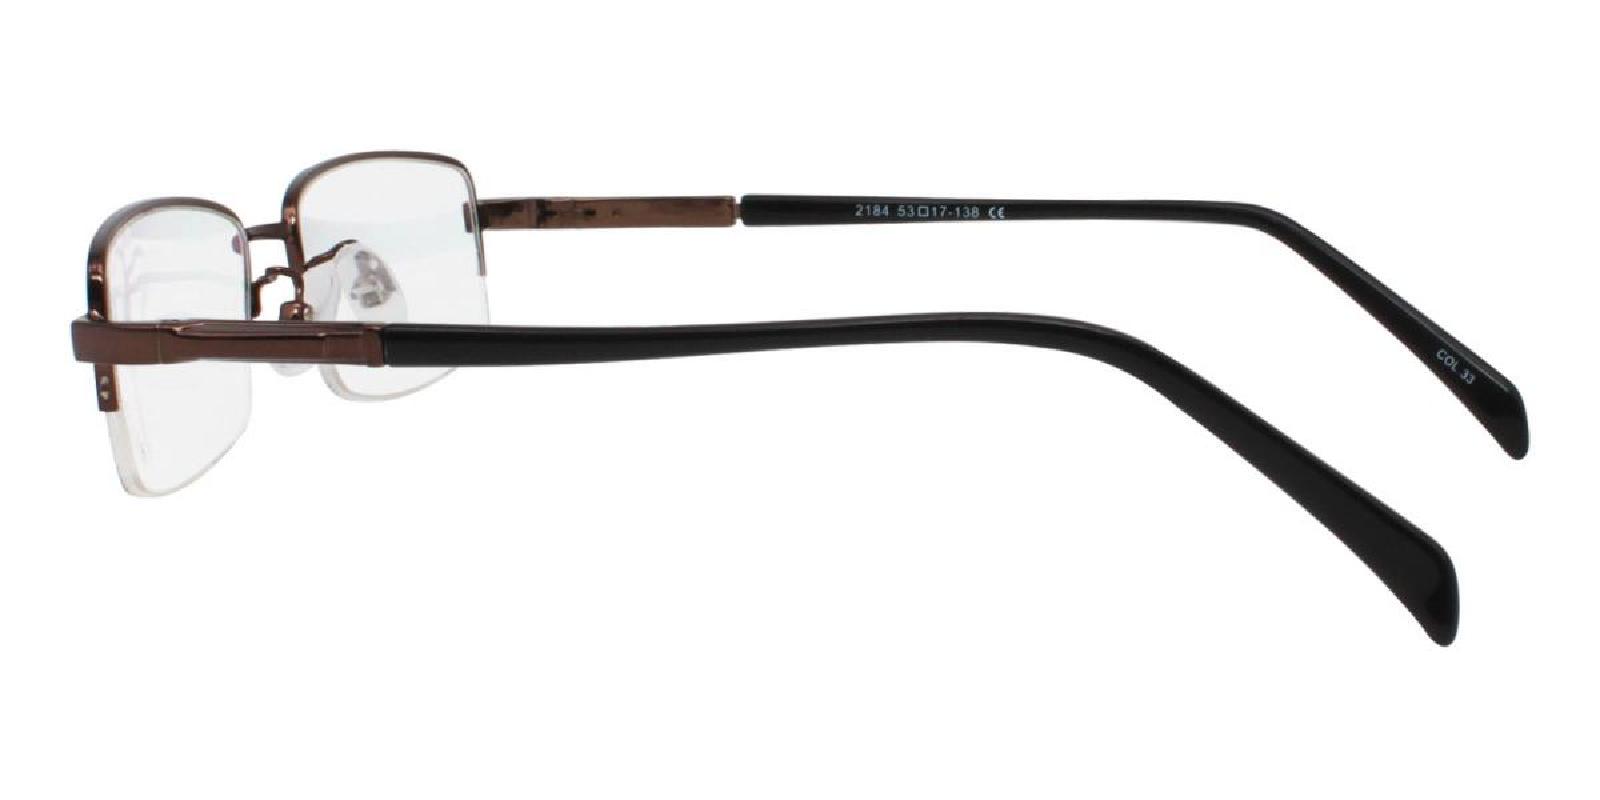 Furox-Brown-Rectangle-Metal-Eyeglasses-detail